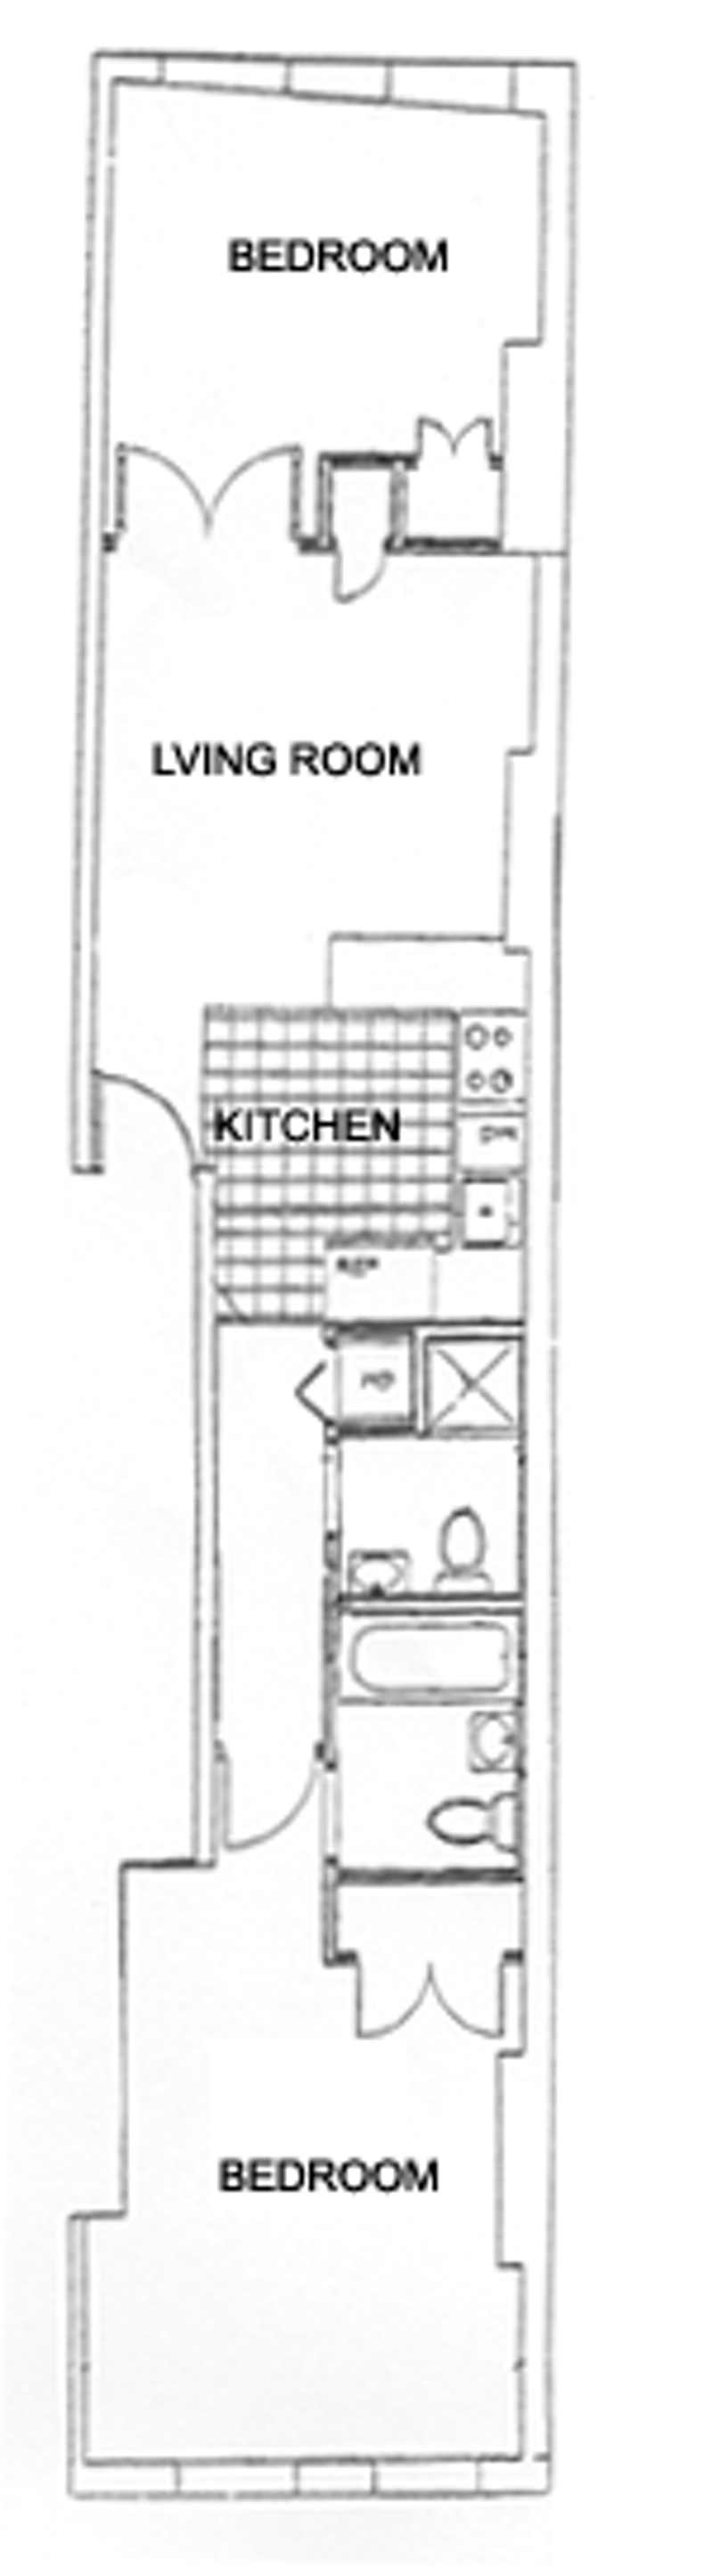 Floorplan for 51 East Houston Street, 1A